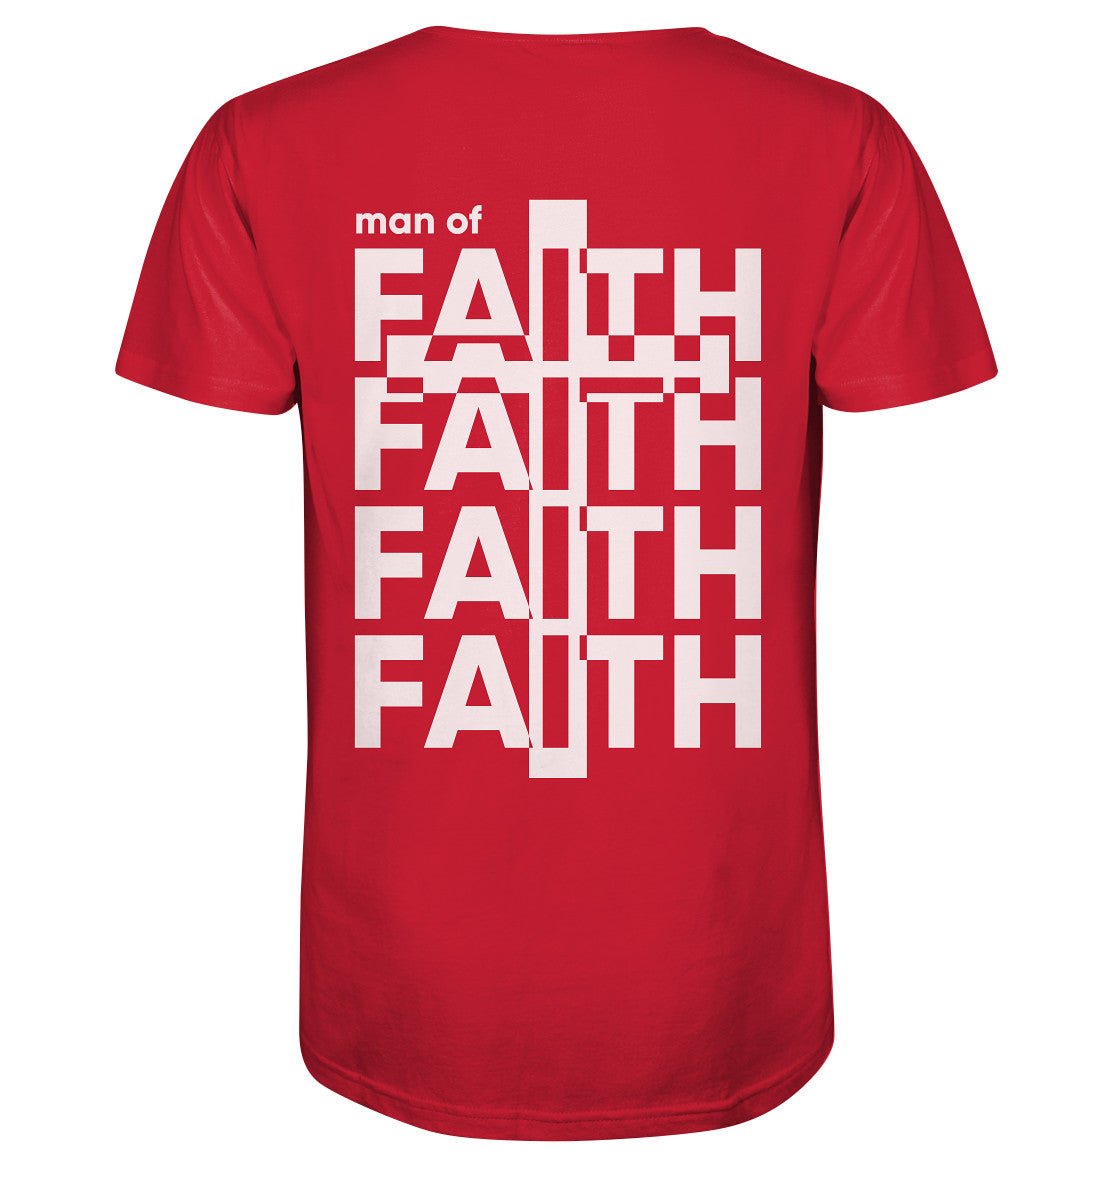 Man of FAITH - Organic Shirt